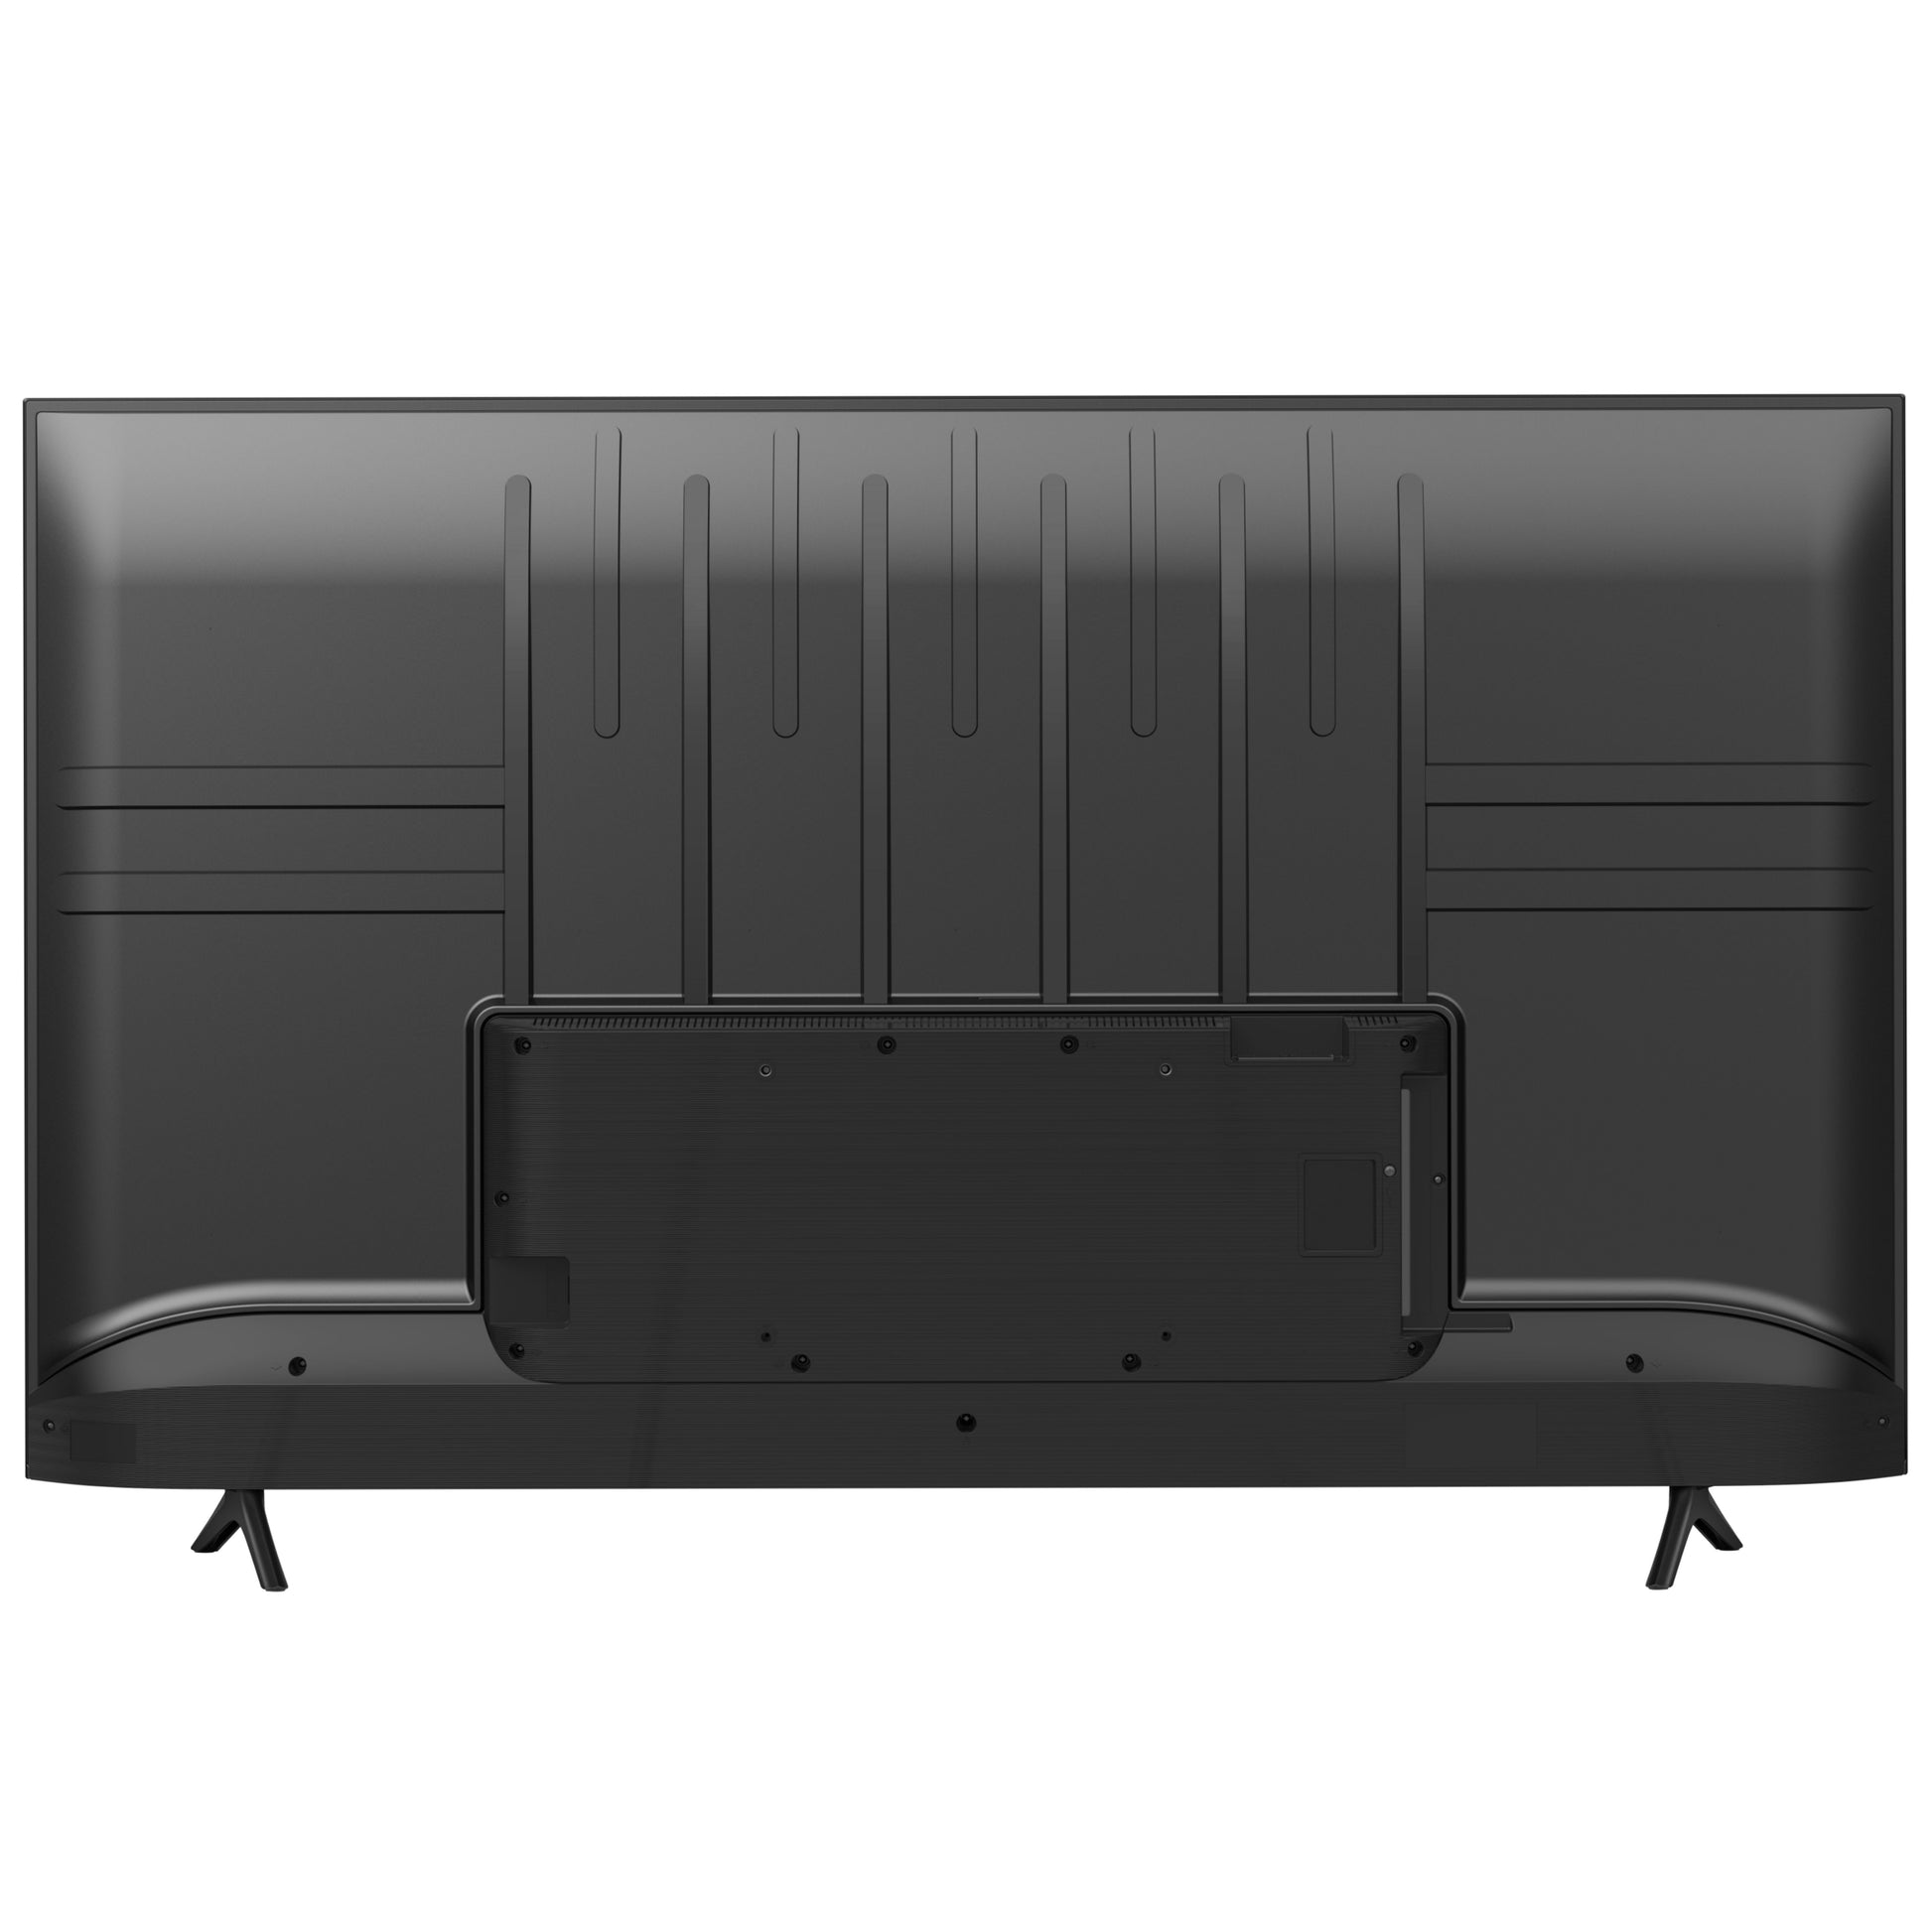 Hisense 55 inch 55A6G Smart 4K UHD LED TV + 1 Year Warranty (Free Wall Mount) - Back View